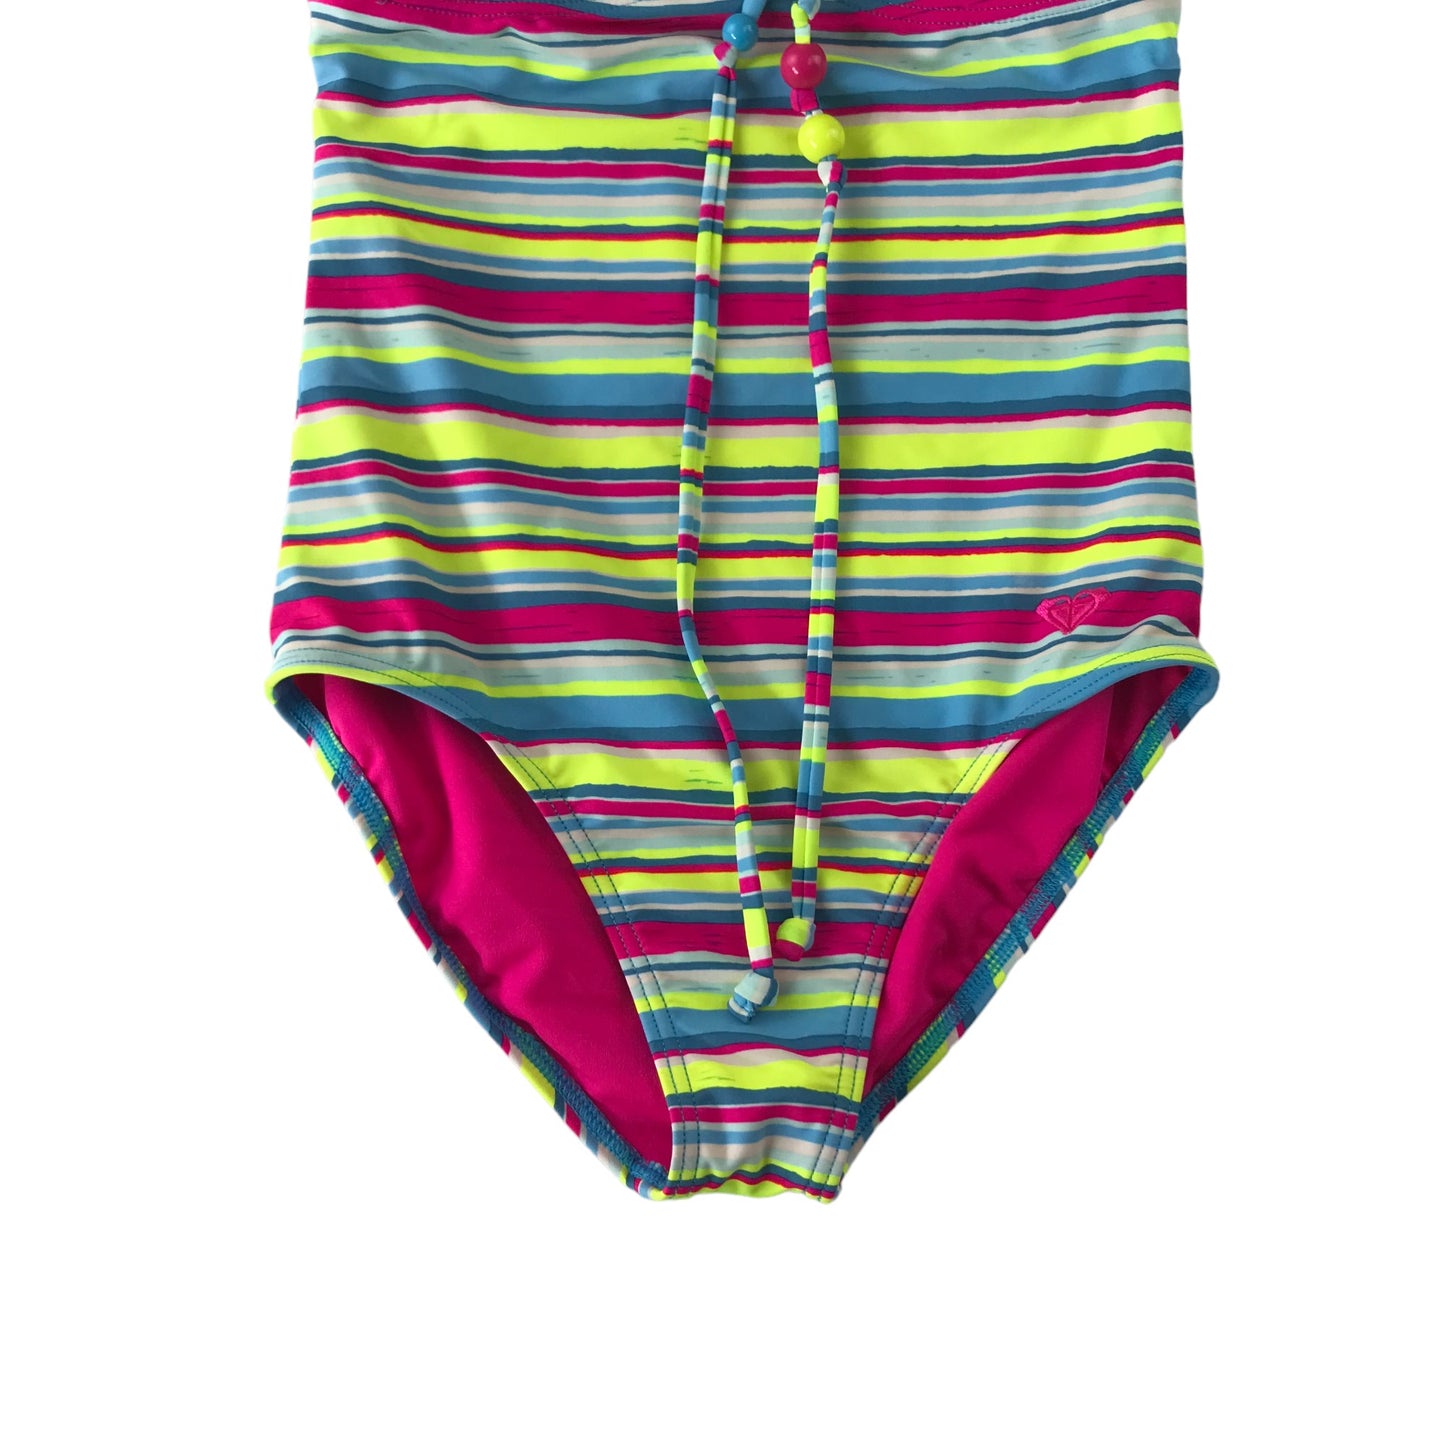 Roxy Girls Swimsuit Age 13 Multicolour Stripy sleeveless One Piece Cossie